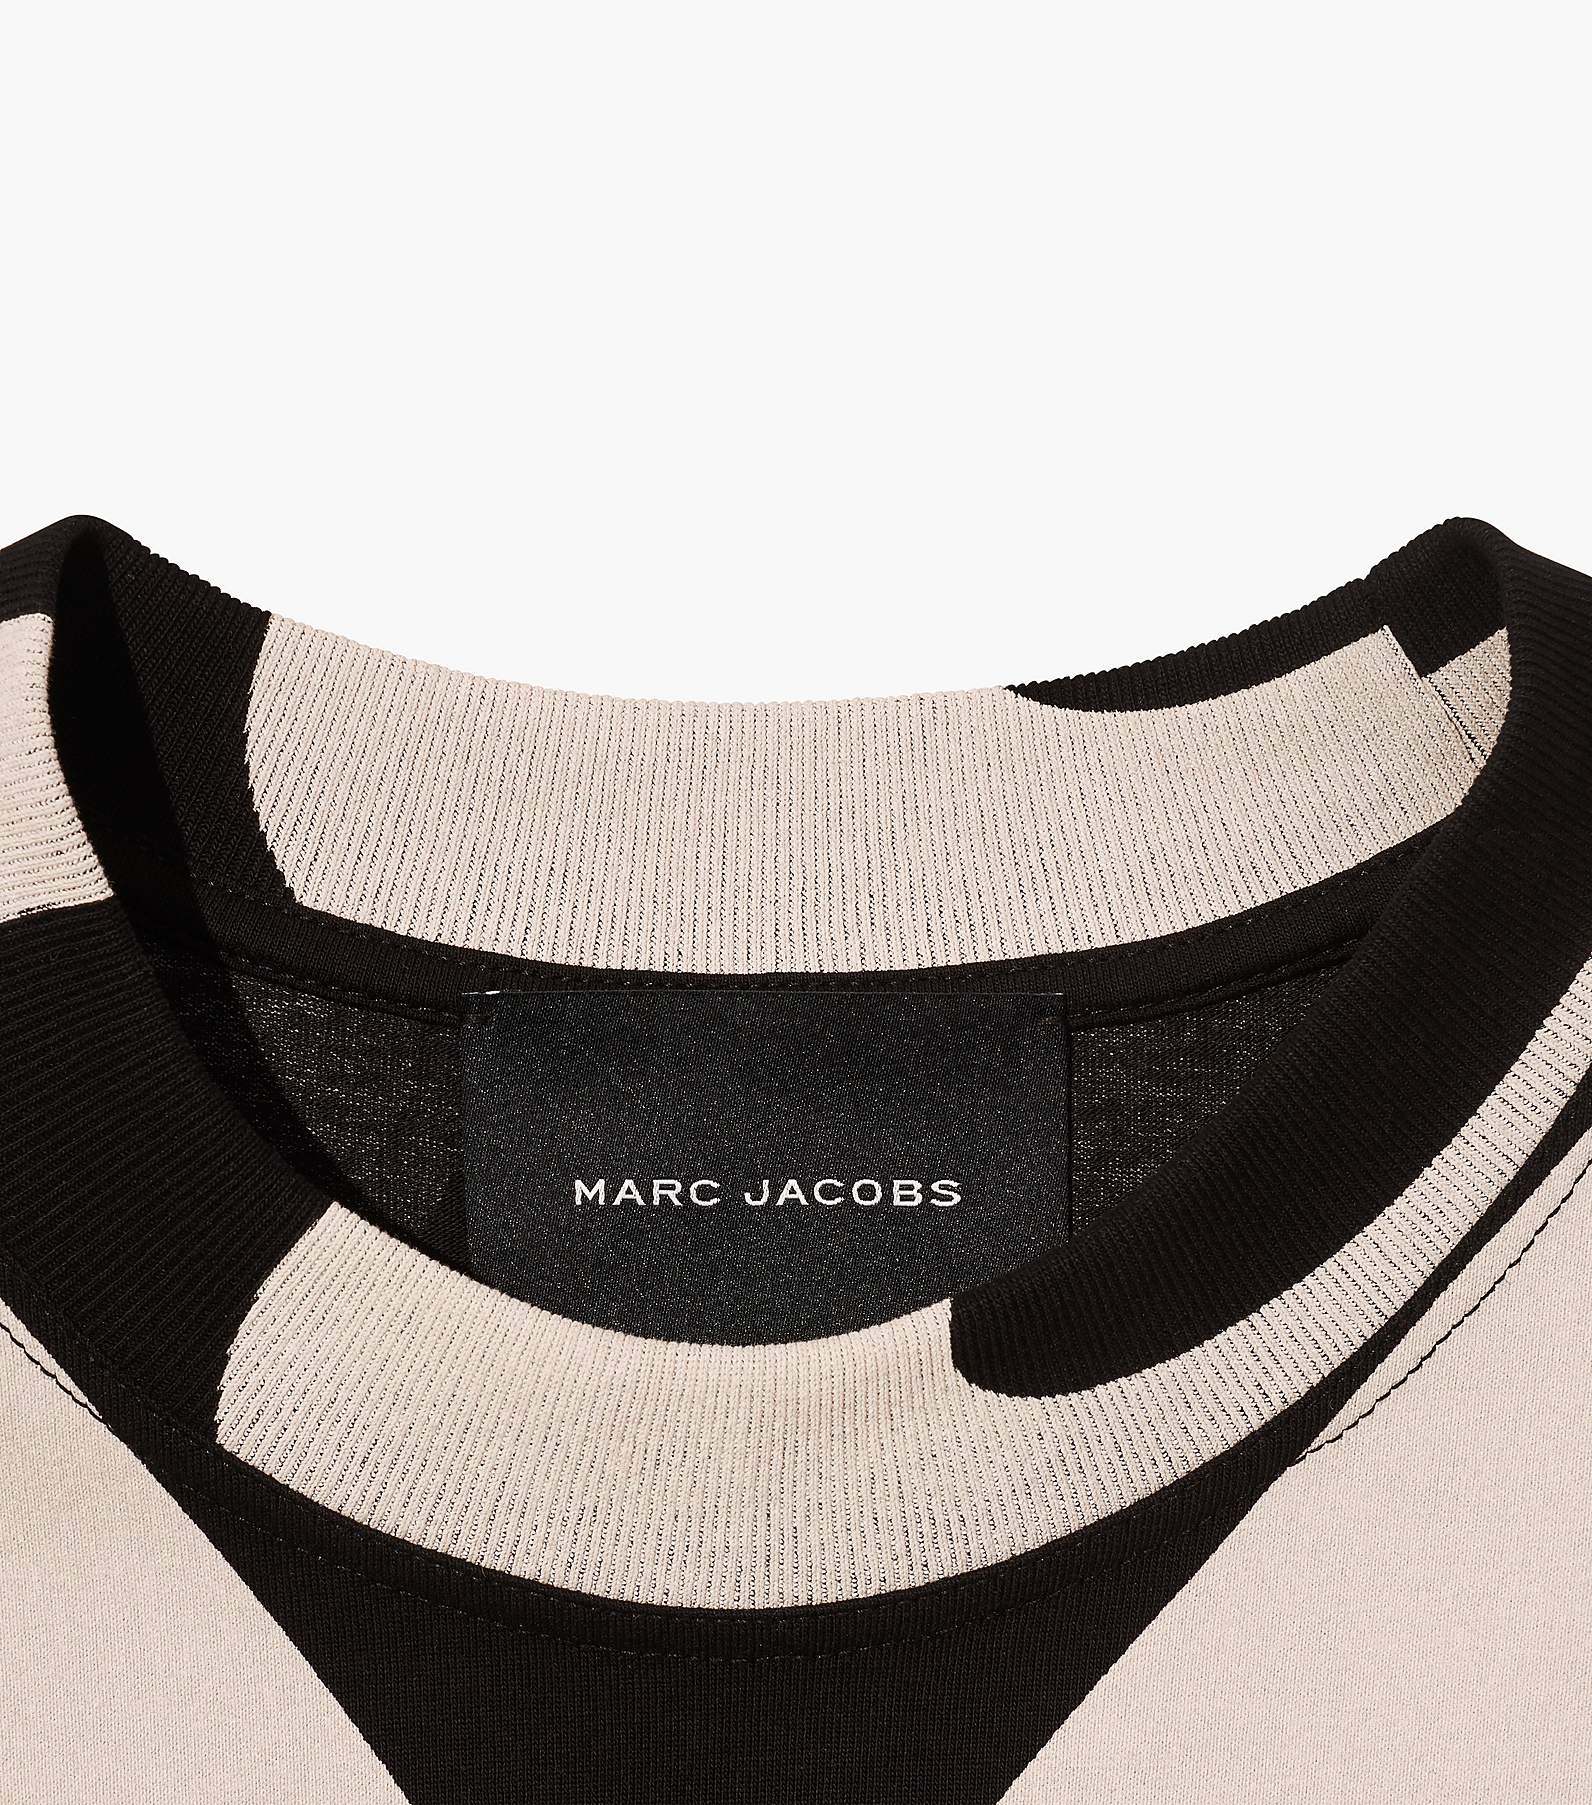 Marc Jacobs The Seamed Monogram Dress in Black/Ivory, Size Medium